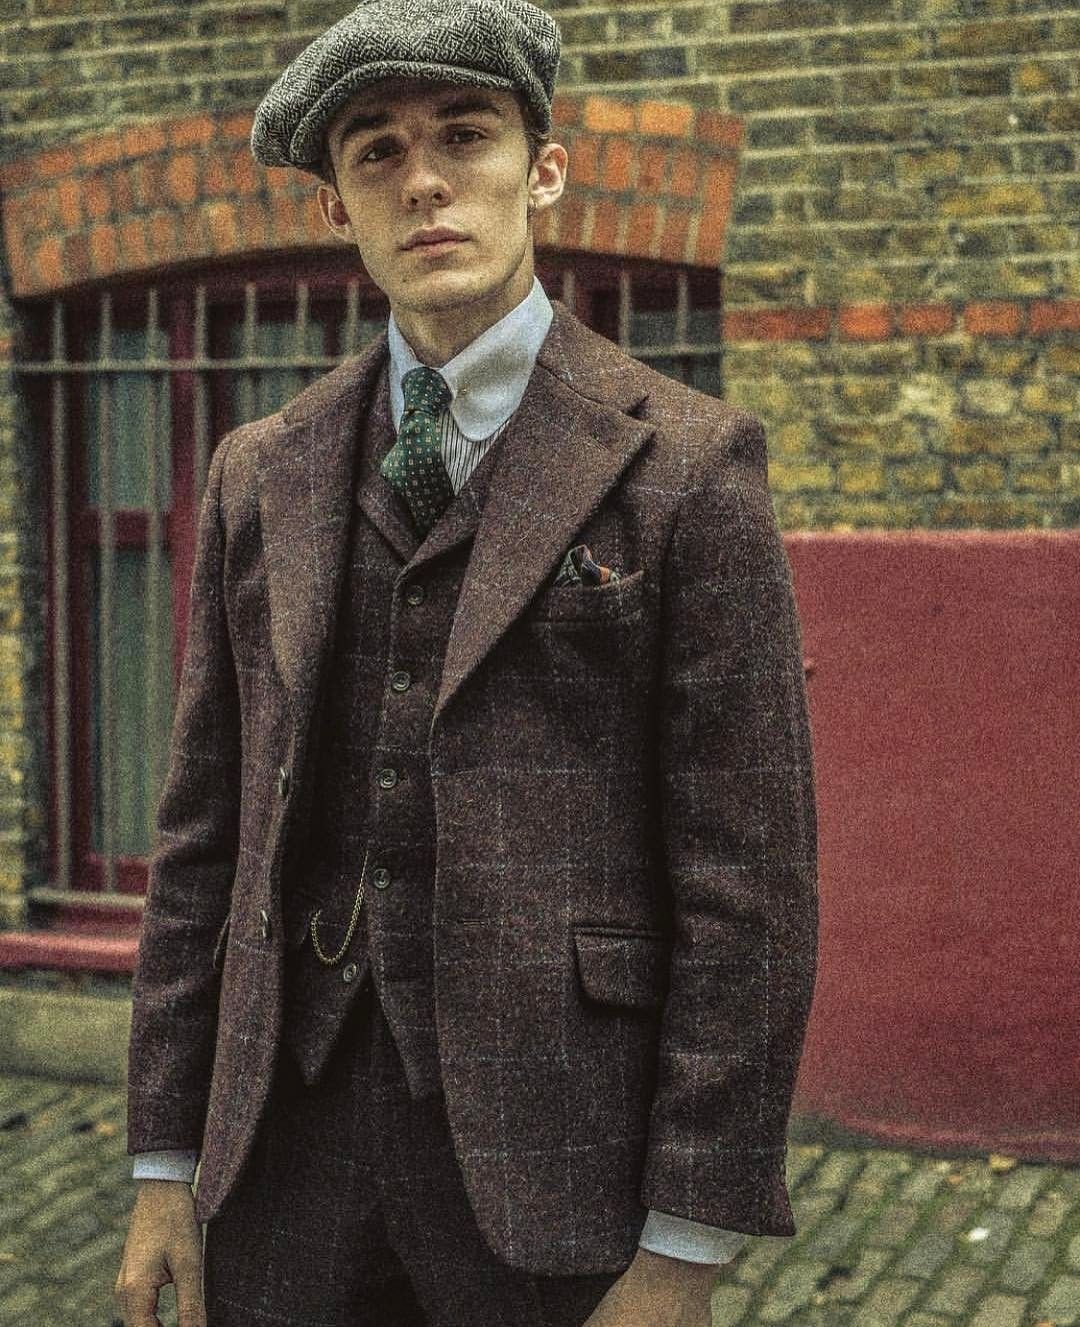 50 е мужчины. Thomas Farthing твид. Британский твидовый костюм 20 век. Твидовый костюм 19 века Британии. Твидовый пиджак мужской Ирландия.